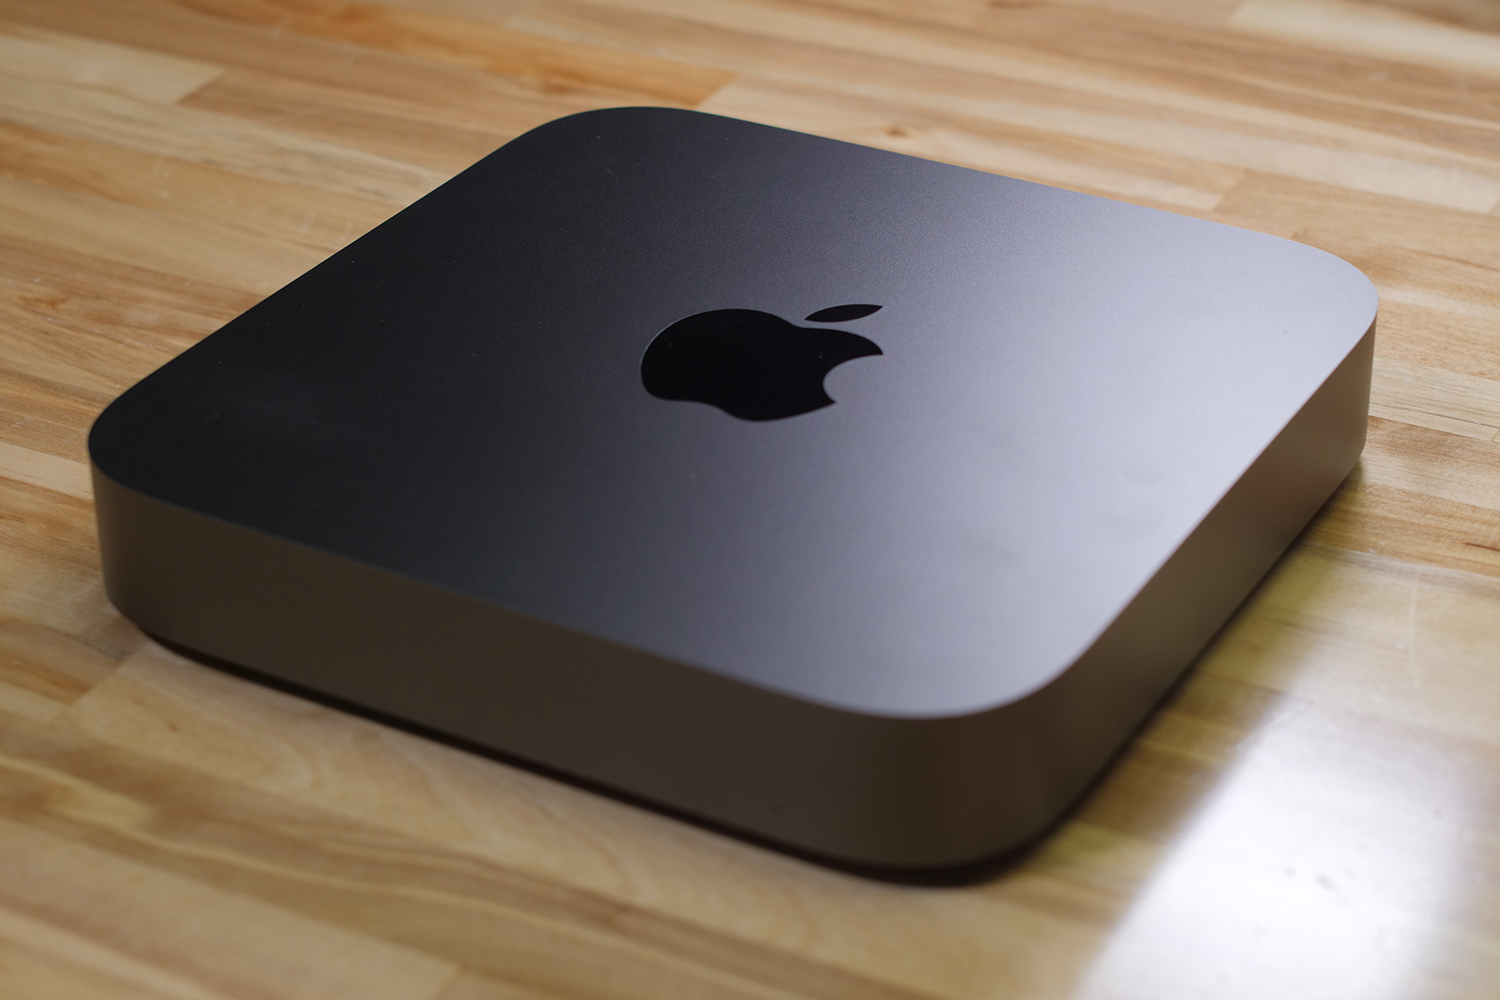 Apple Mac Mini (2018) Review | Digital Trends